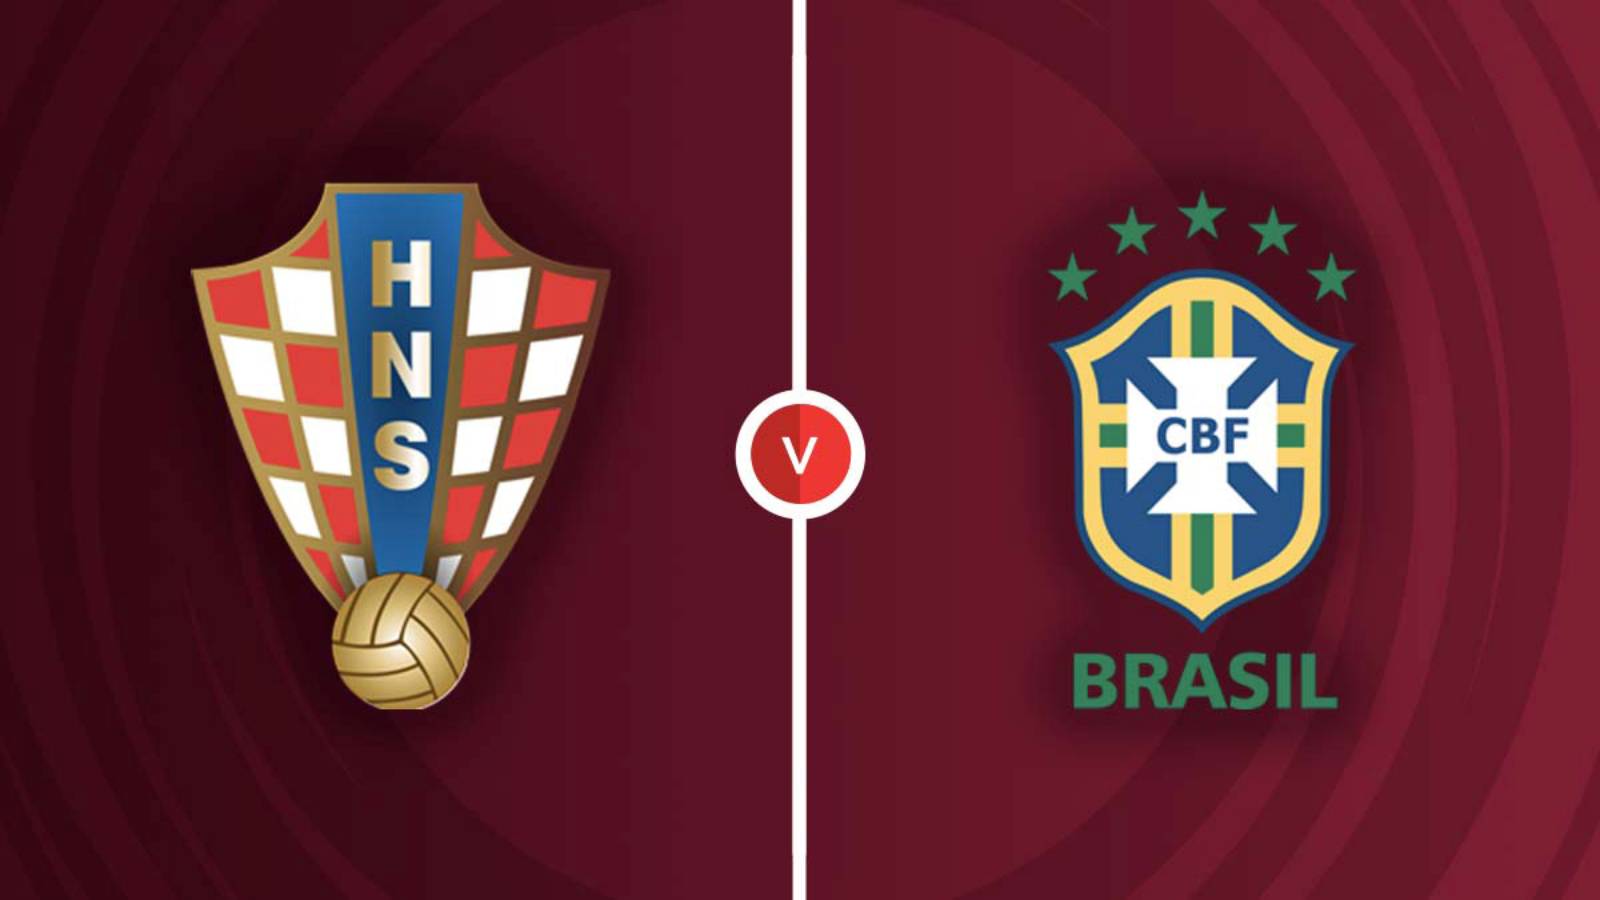 CROATIA – BRAZILIA LIVE TVR 1 CAMPIONATUL MONDIAL 2022 QATAR